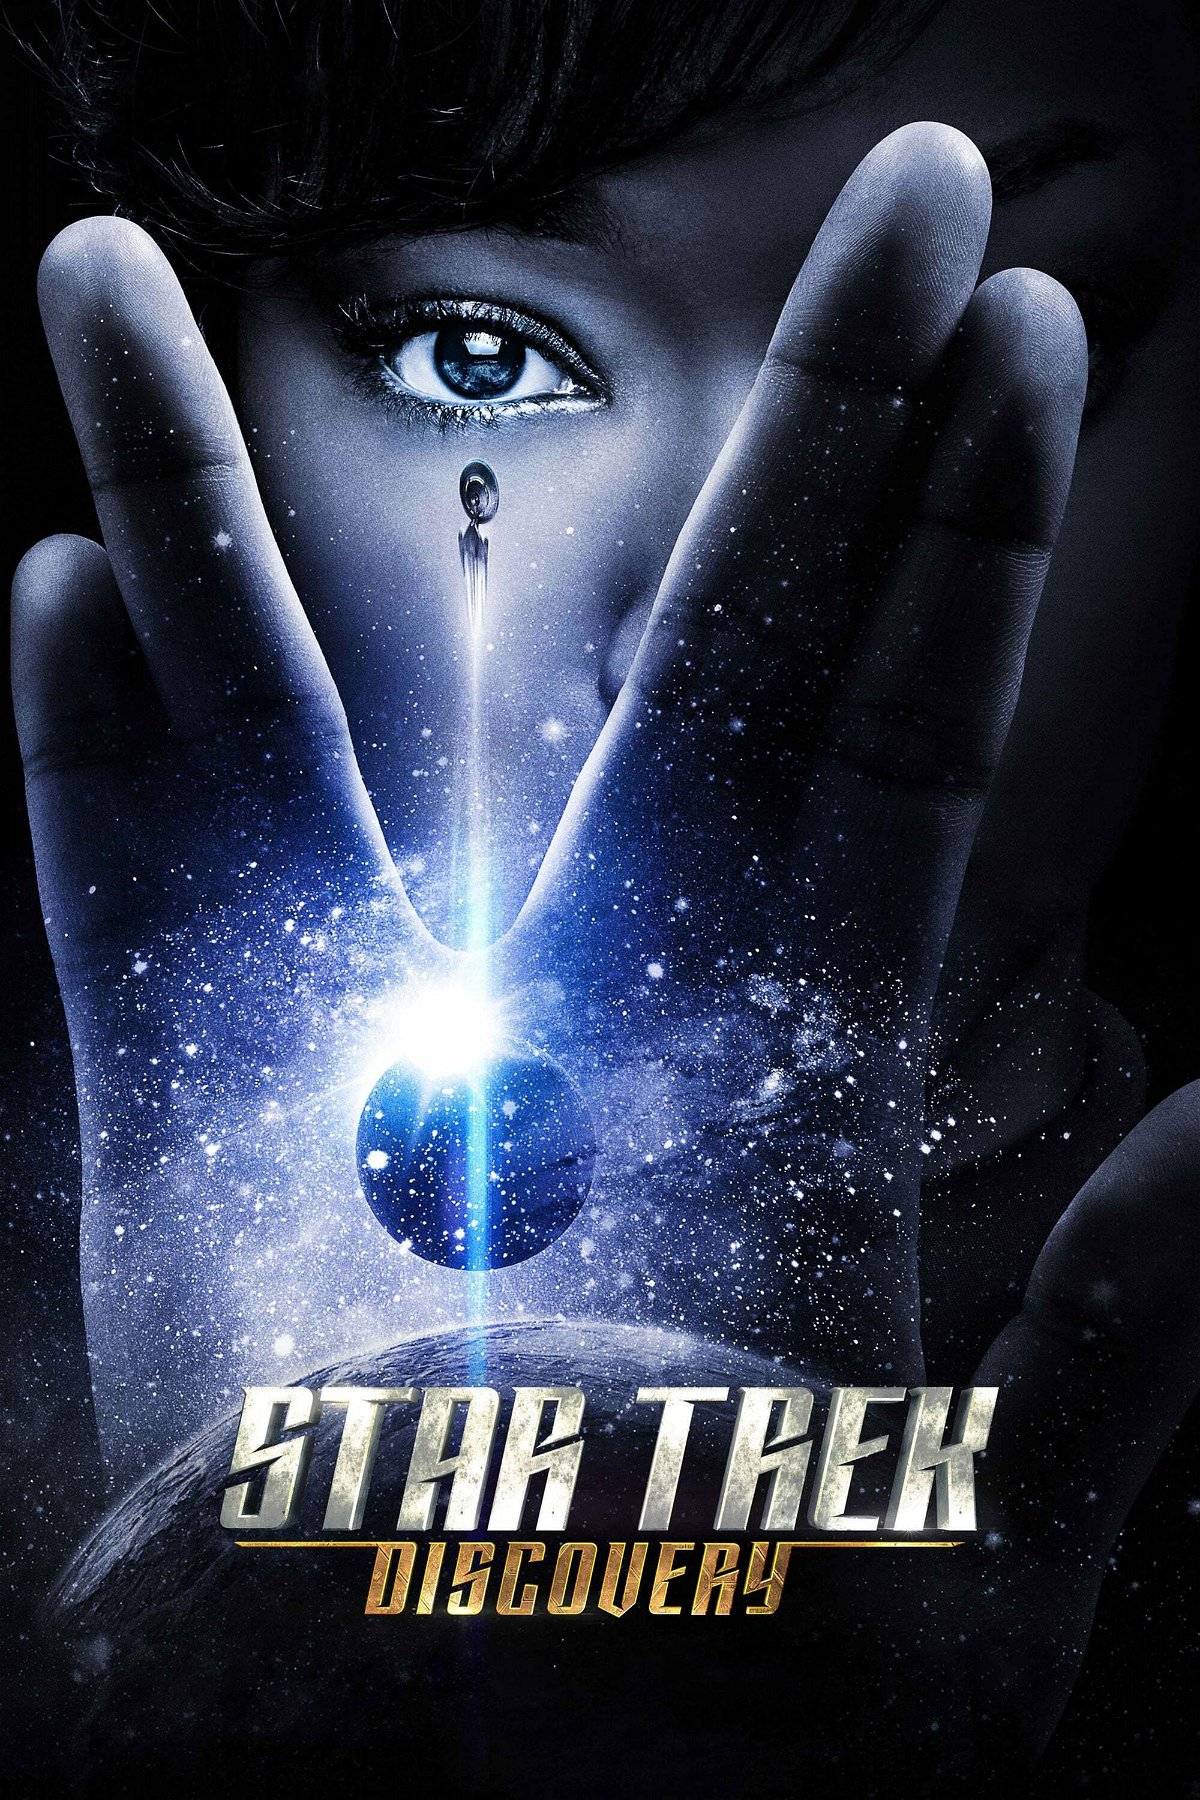 La locandina di Star Trek: Discovery